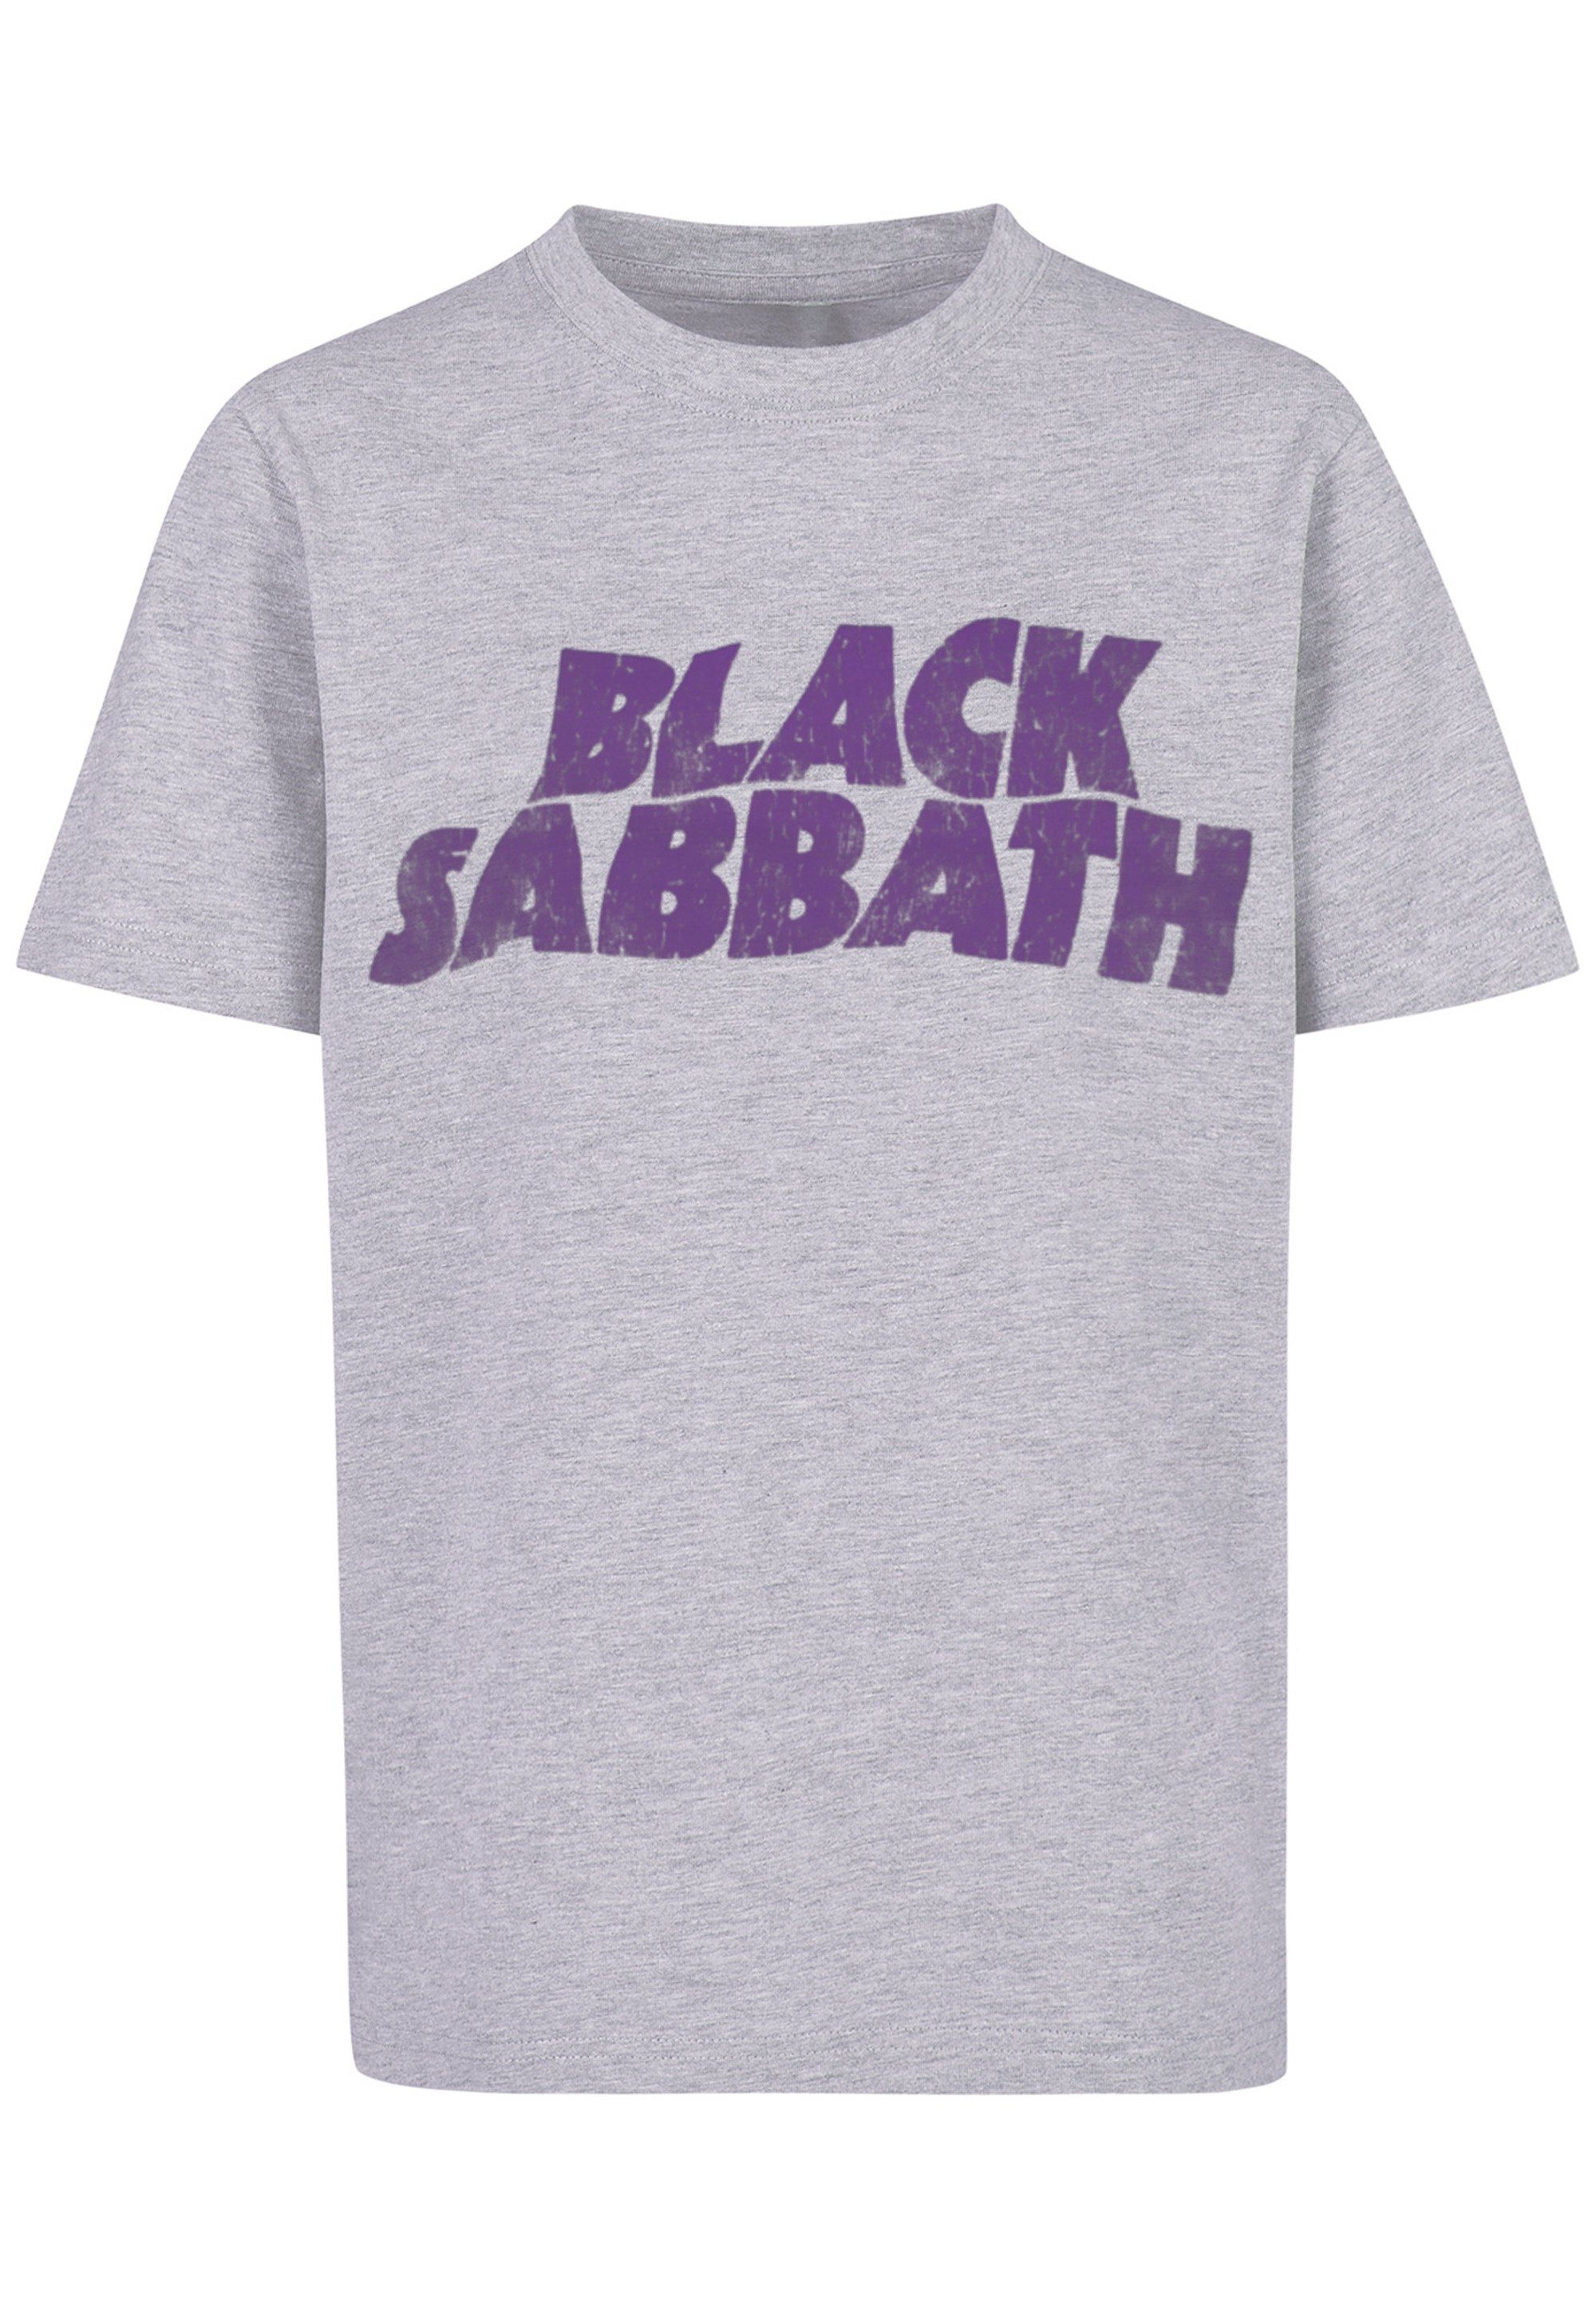 F4NT4STIC T-Shirt Logo Band Distressed heather Wavy Sabbath Black Metal grey Print Black Heavy